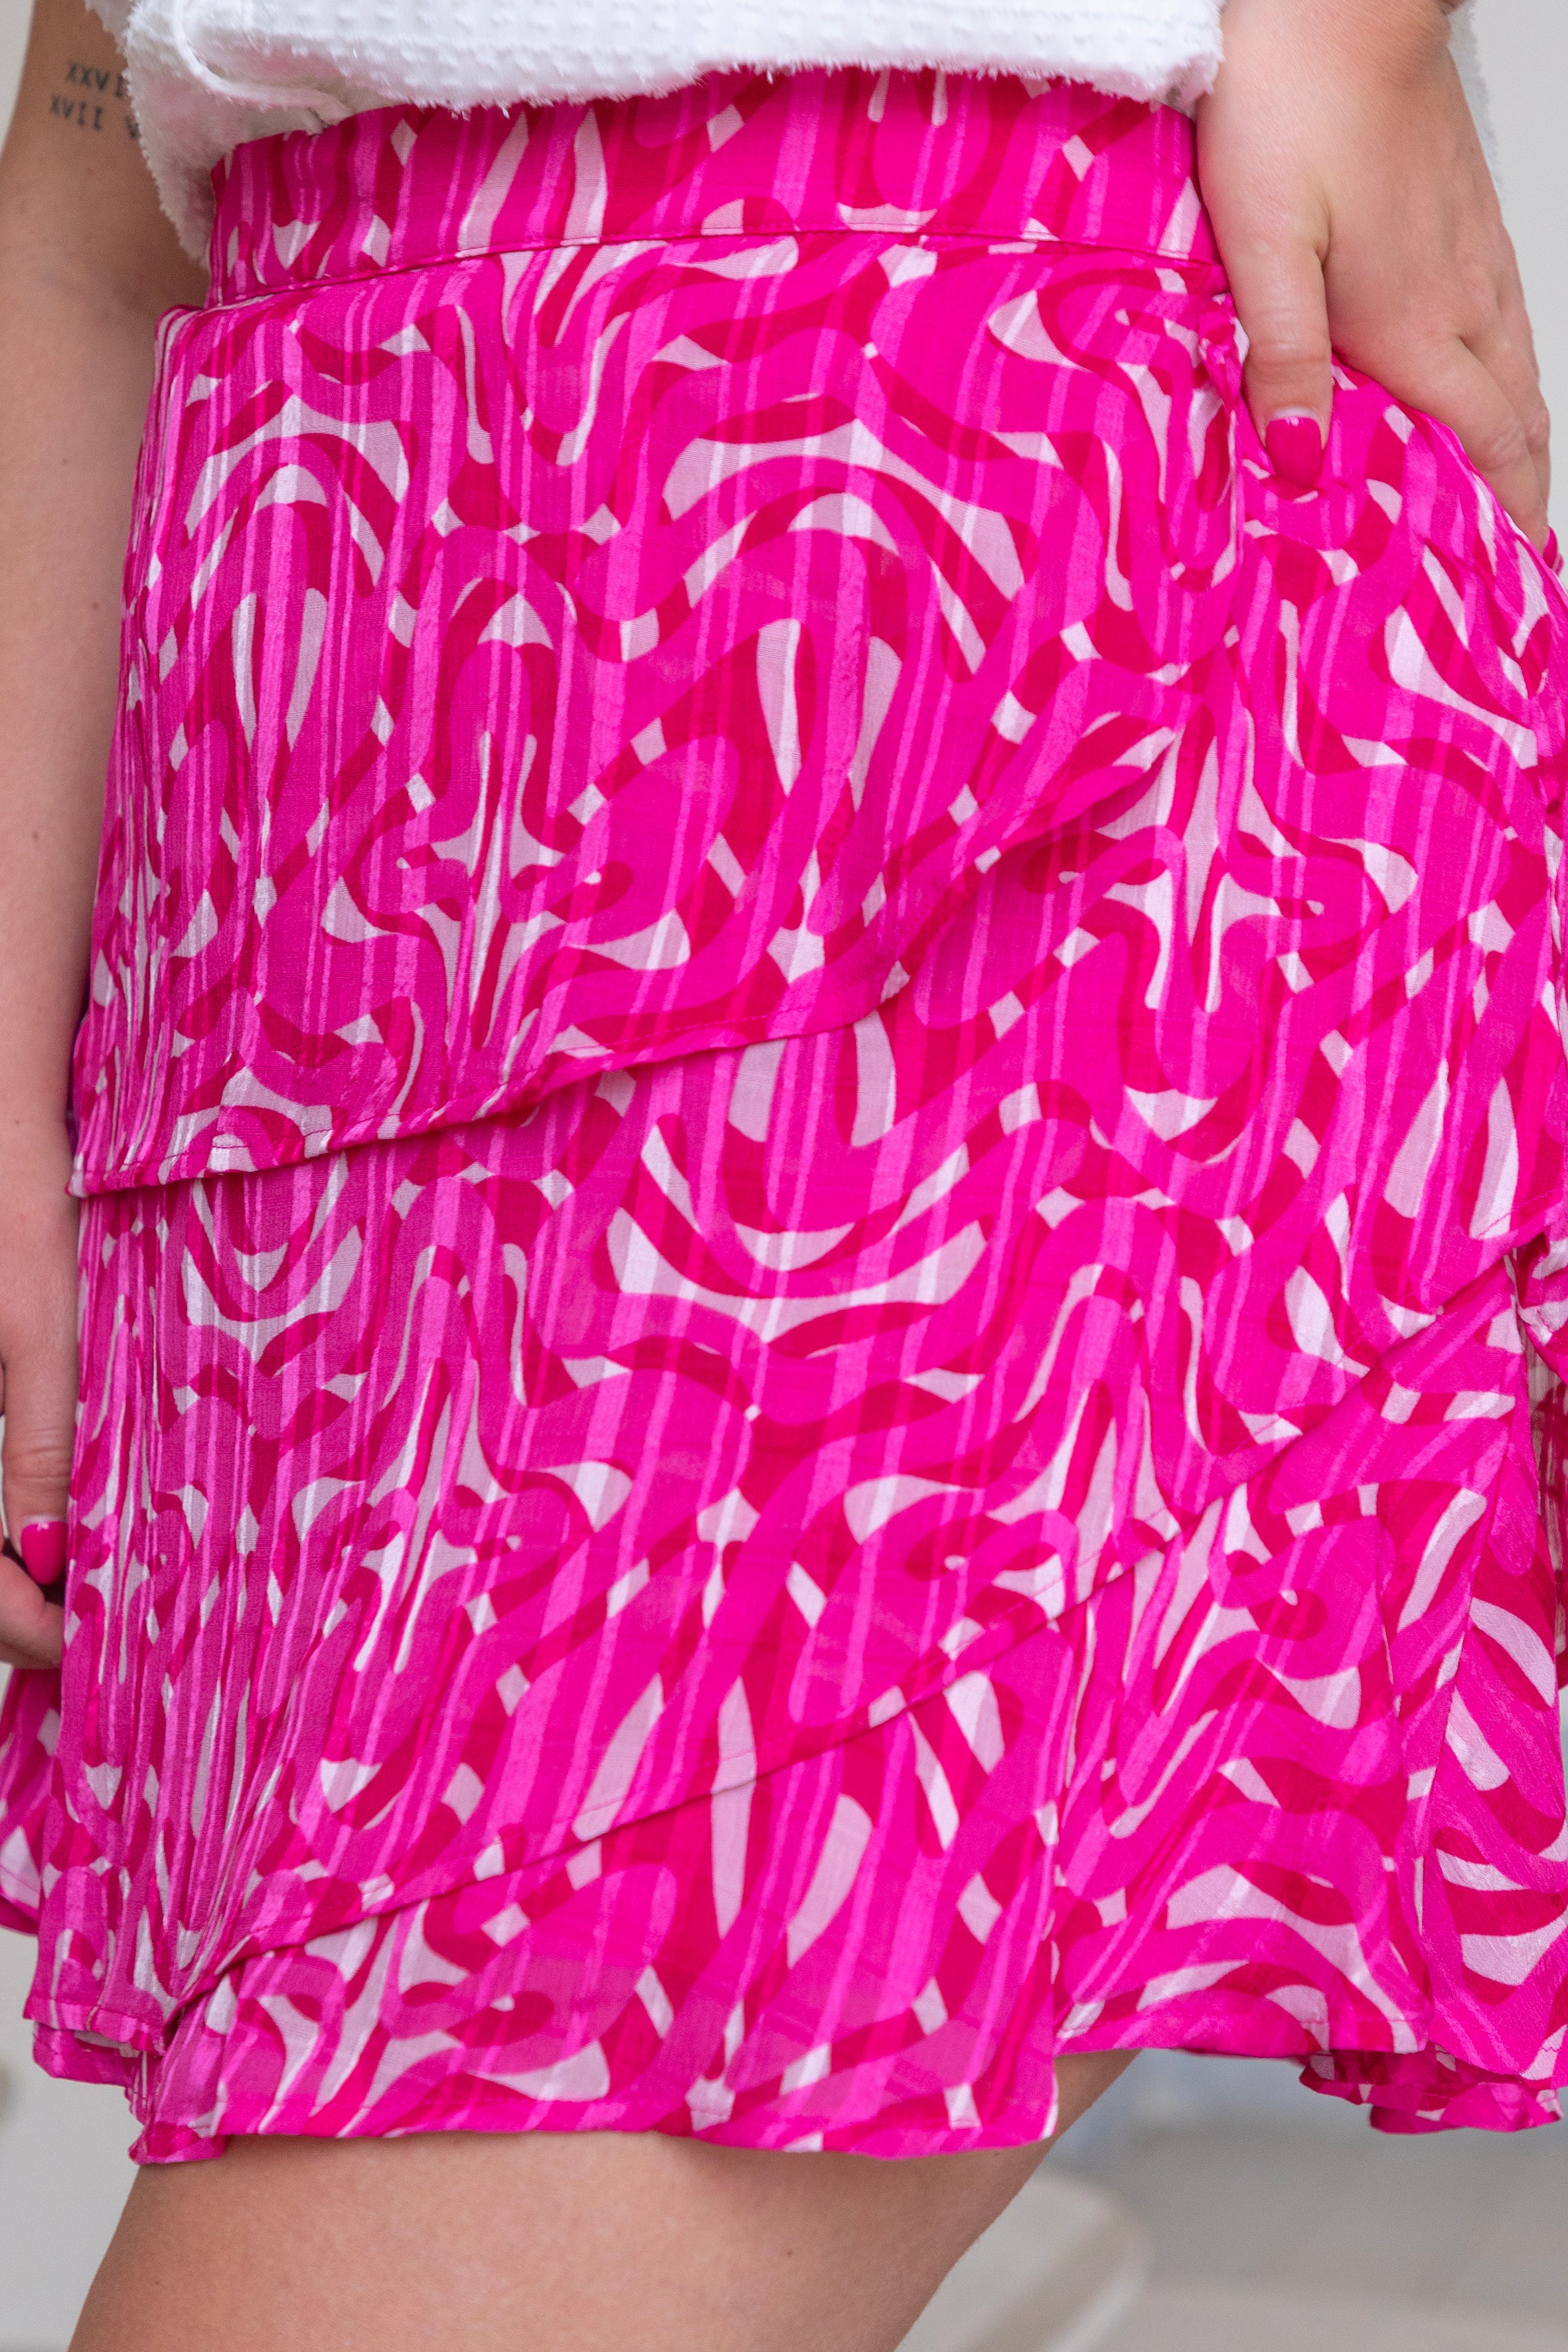 Skirt Saige - pink swirl print